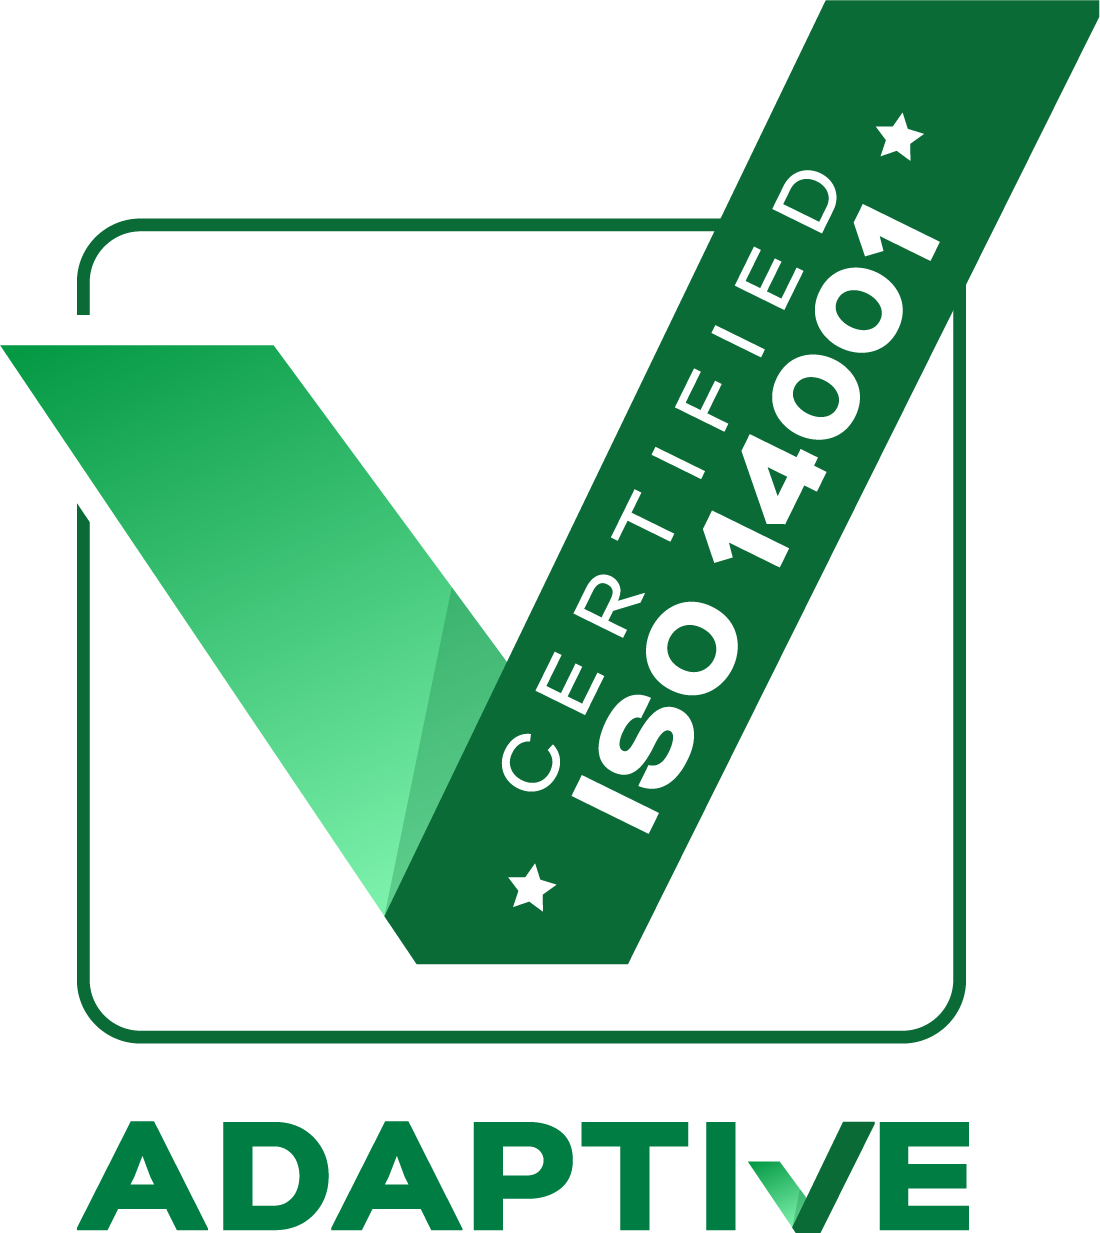 Adaptive Certification Certificate